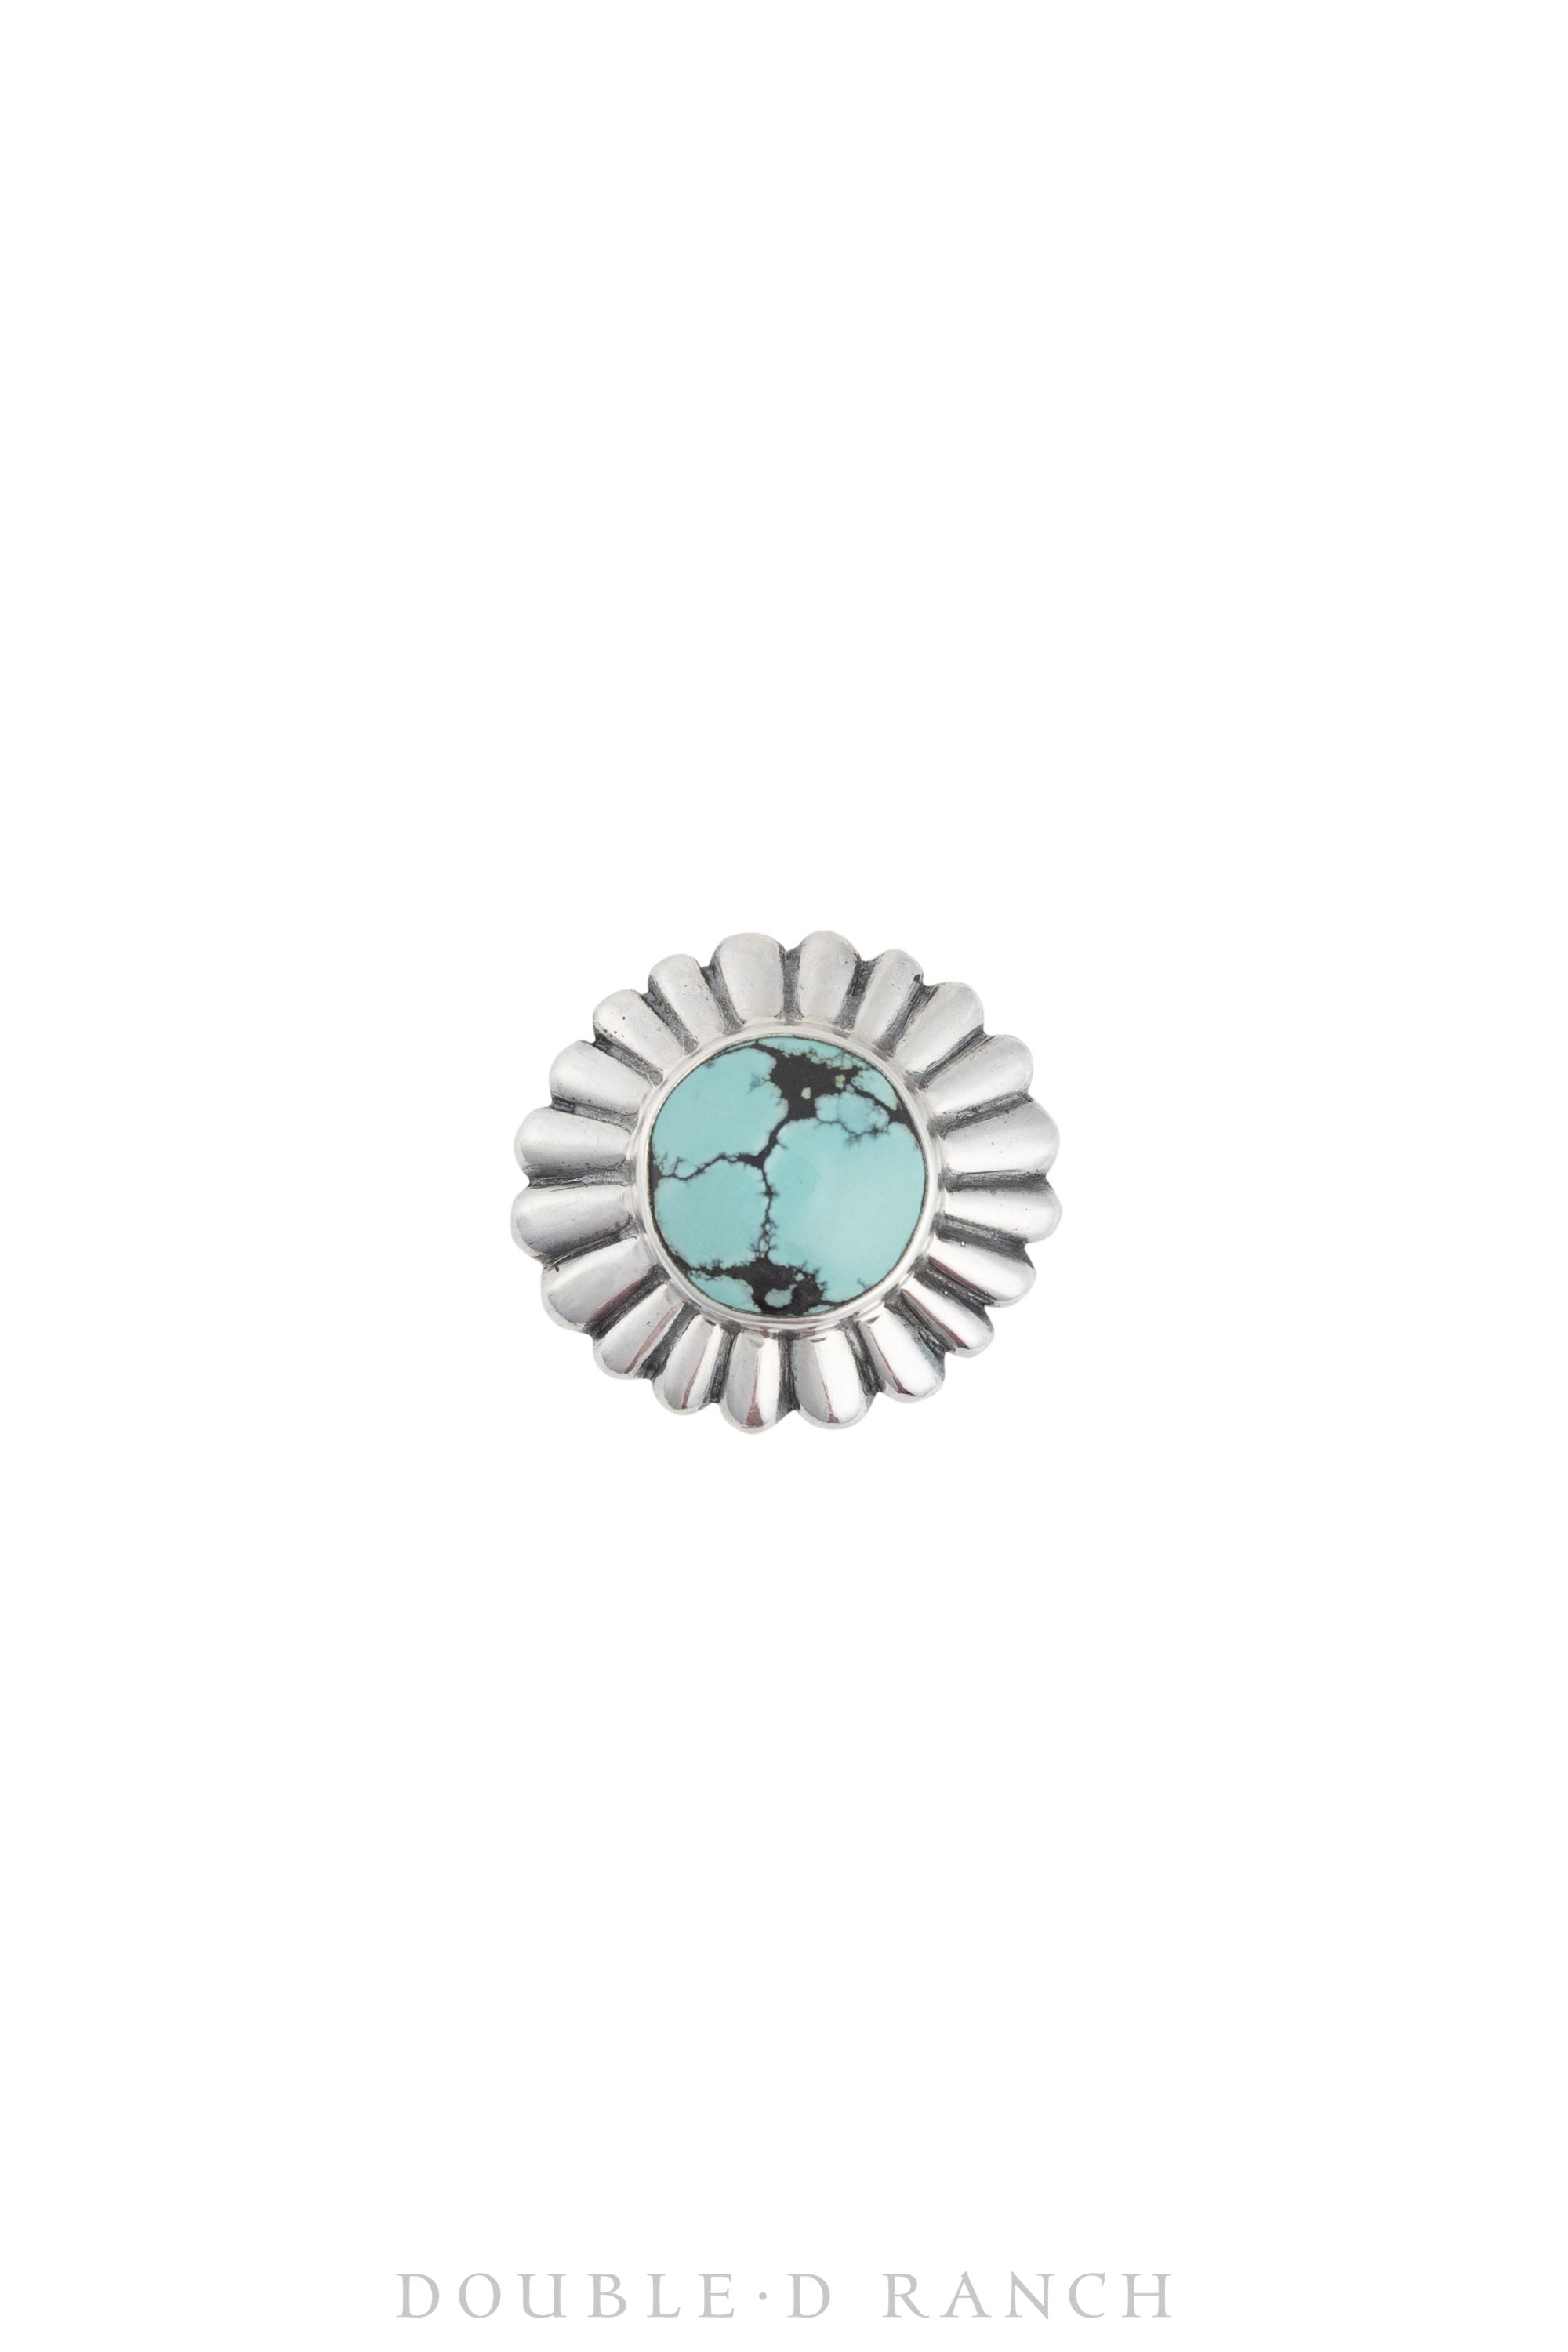 Ring, Turquoise, Nomad, Hallmark, Contemporary, 1357